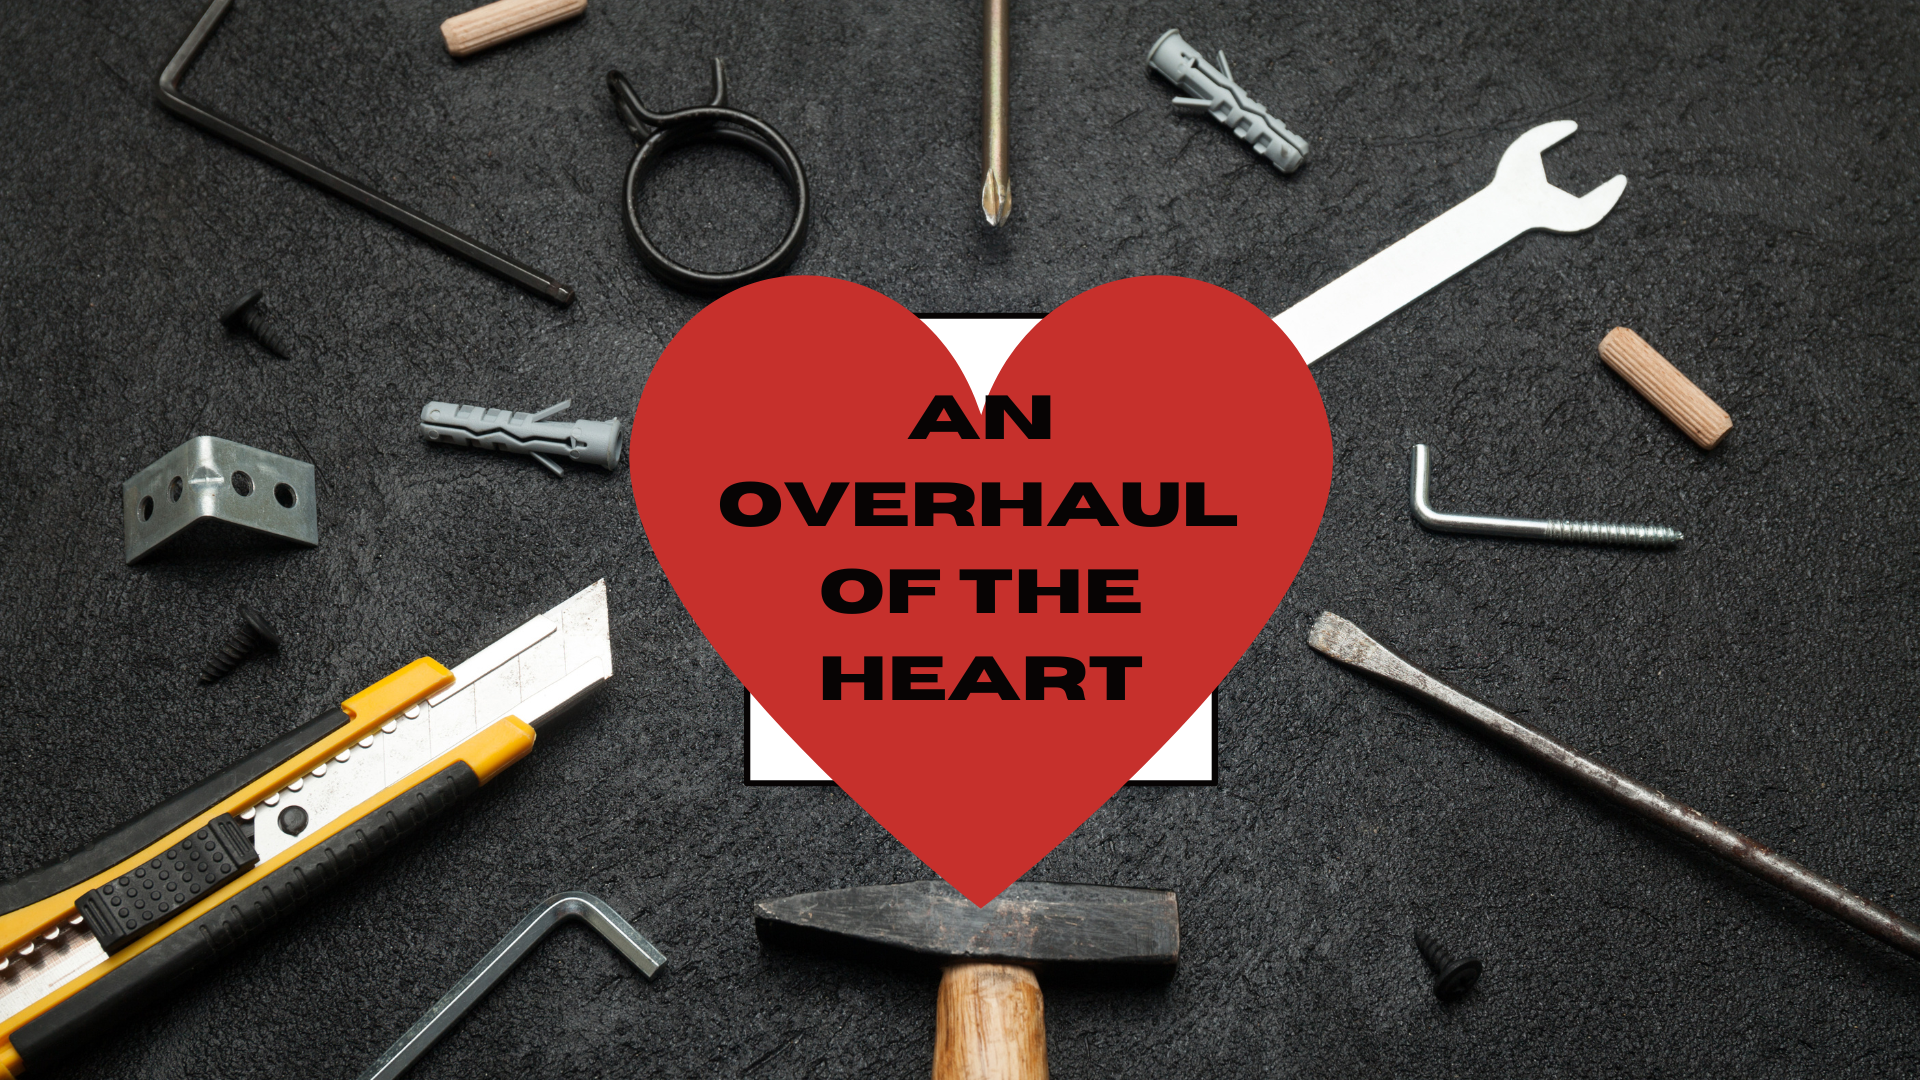 An Overhaul of the Heart